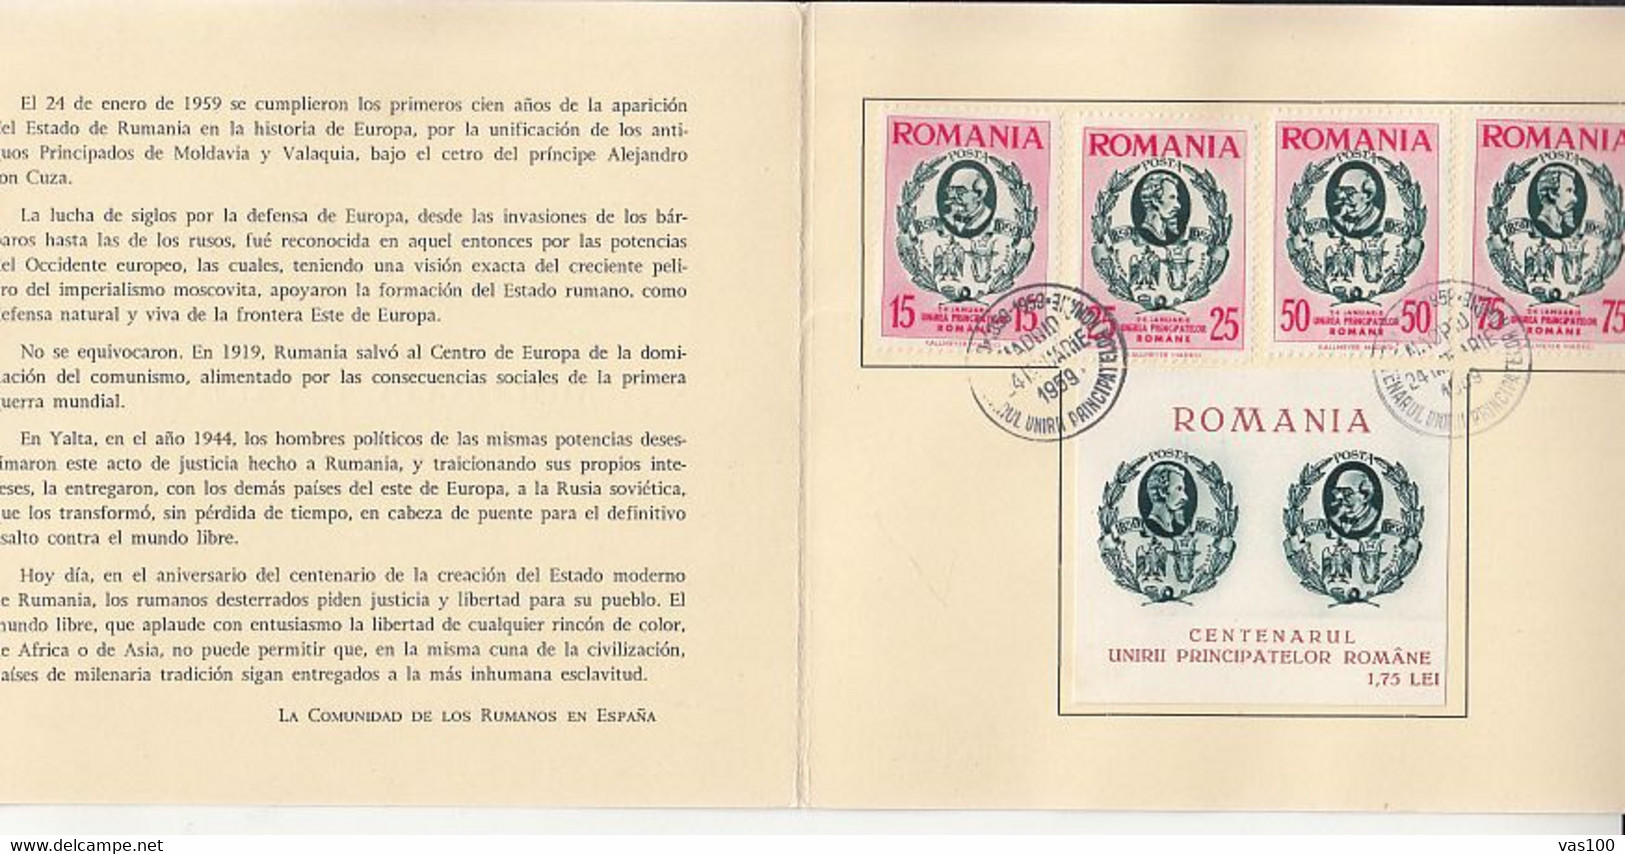 MOLDAVIA AND WALLACHIA UNION, PRINCE AL.I. CUZA, ROMANIAN IN MADRID EXILE ISSUE, BOOKLET, 4X, 1959, ROMANIA - Covers & Documents